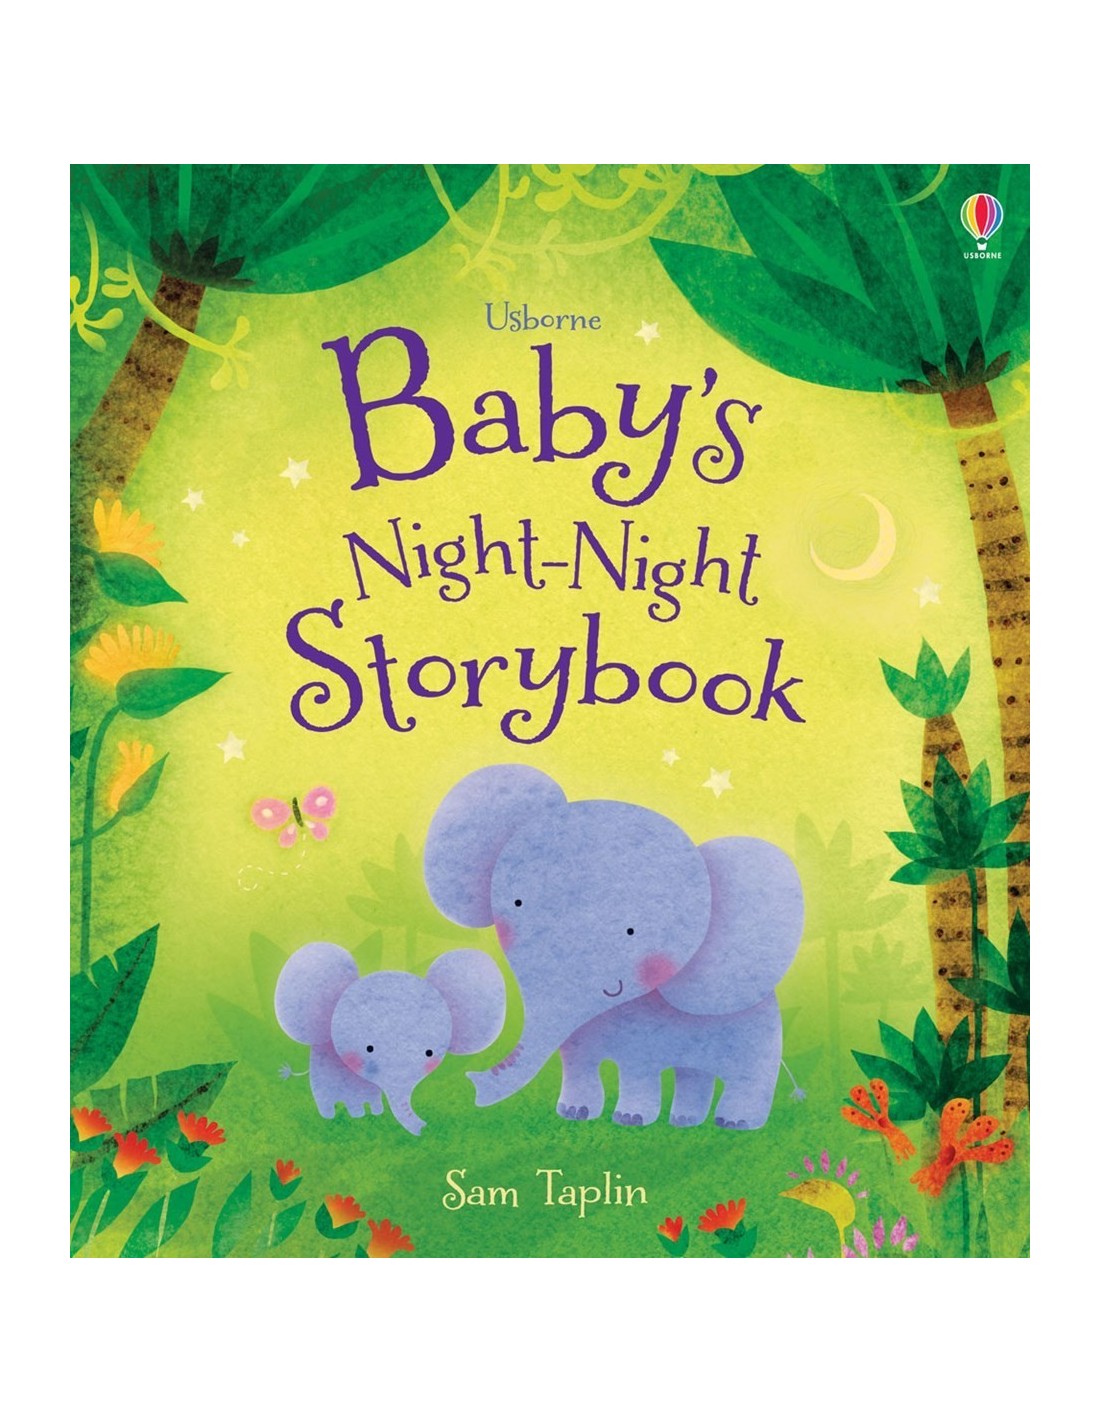 Baby's night-night storybook